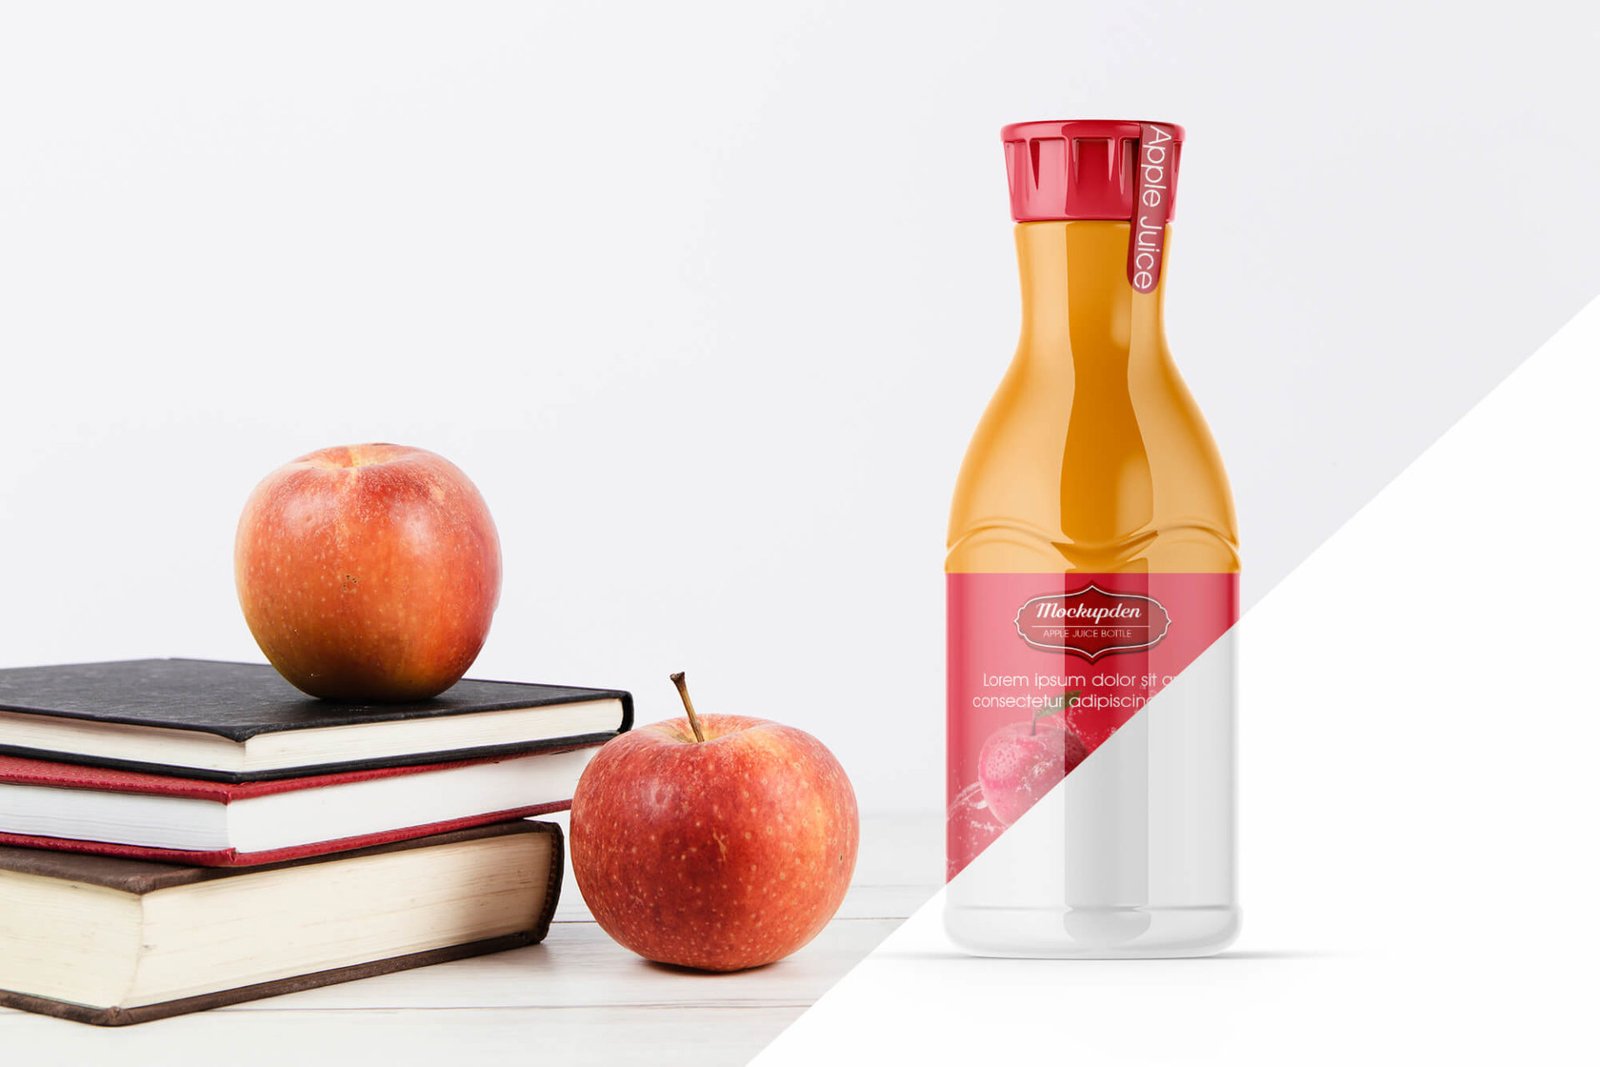 Download 35+ Best Juice Bottle Mockup PSD Templates | Free & Premium Collection